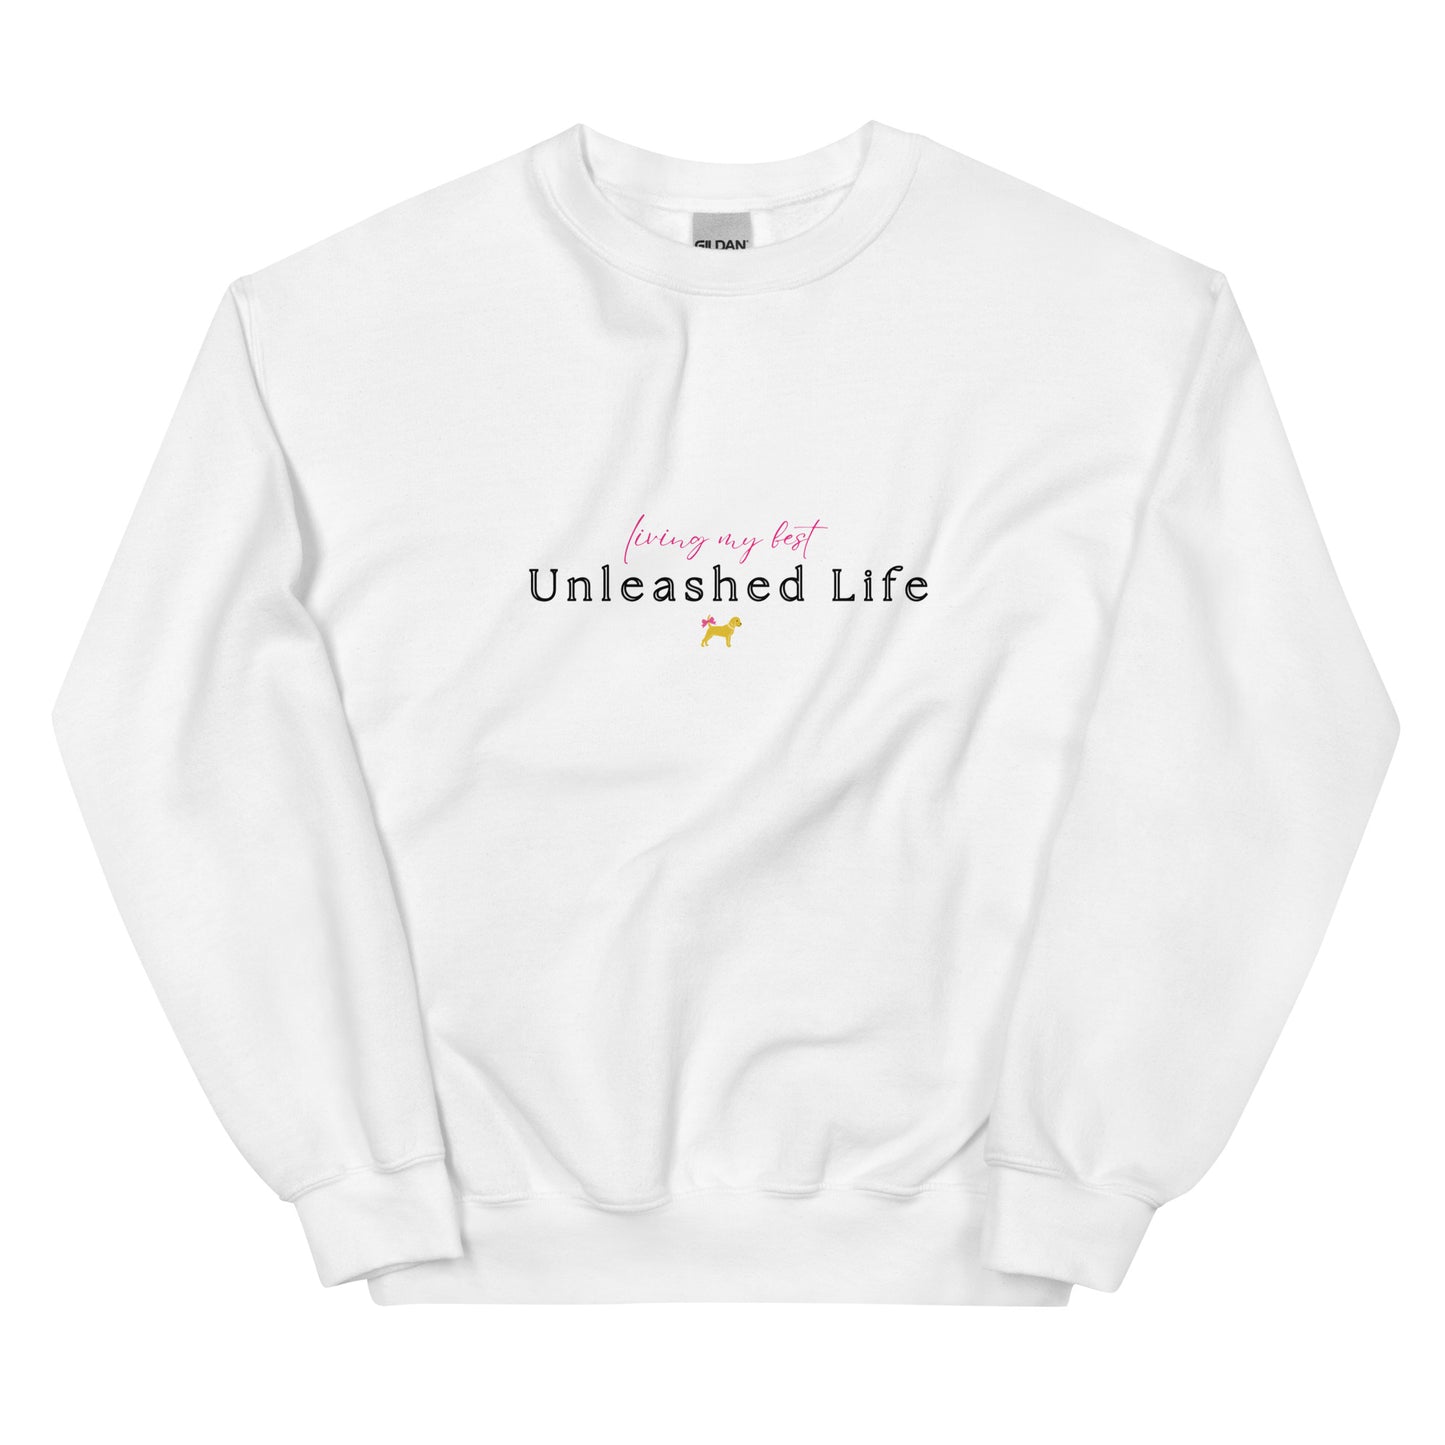 Unleashed Life Living My Best Sweatshirt